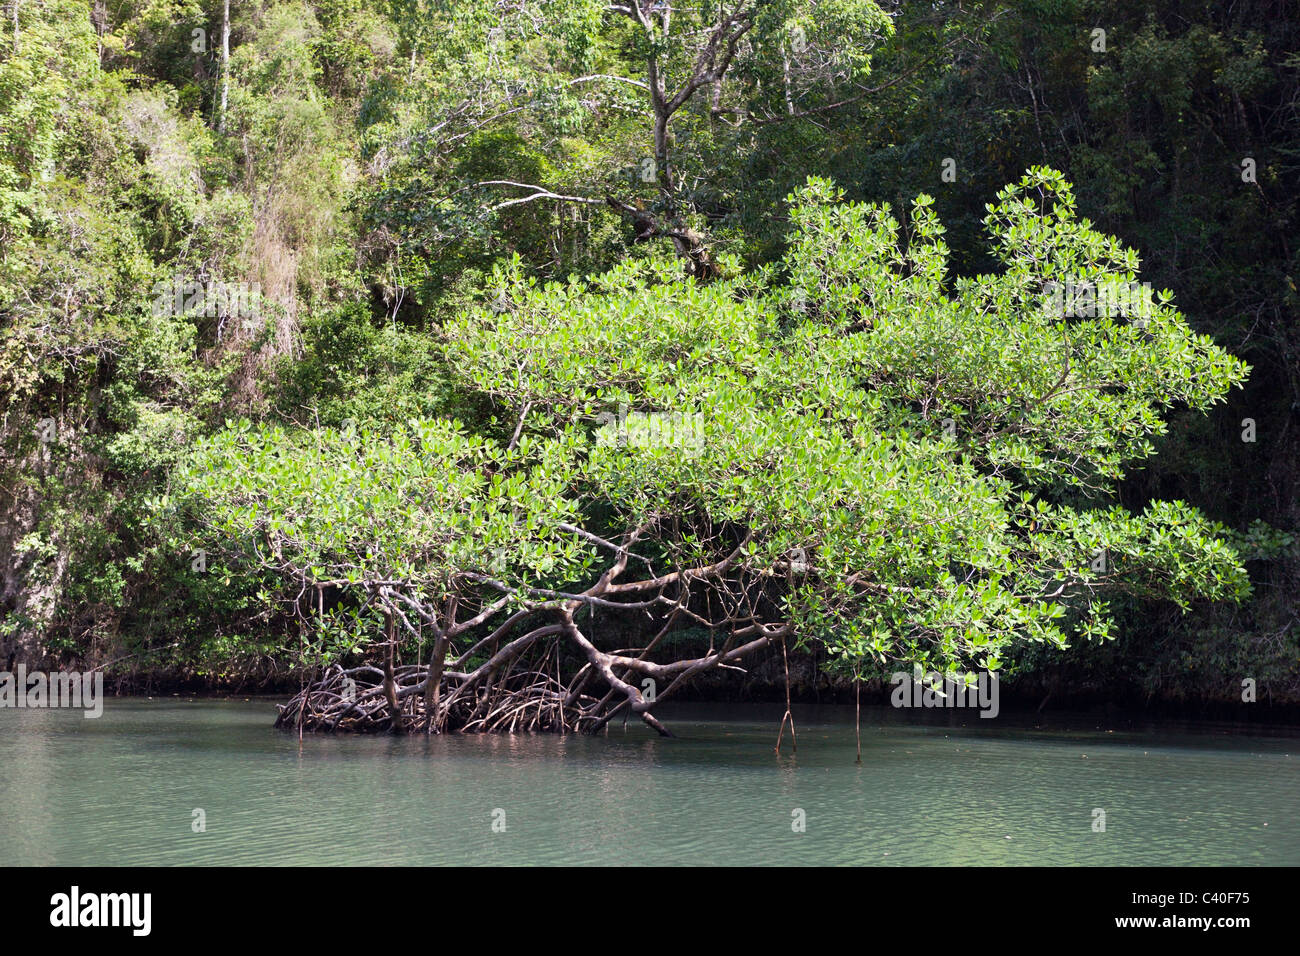 Mangroves, Rhizophora, Los Haitises National Park, Dominican Republic Stock Photo